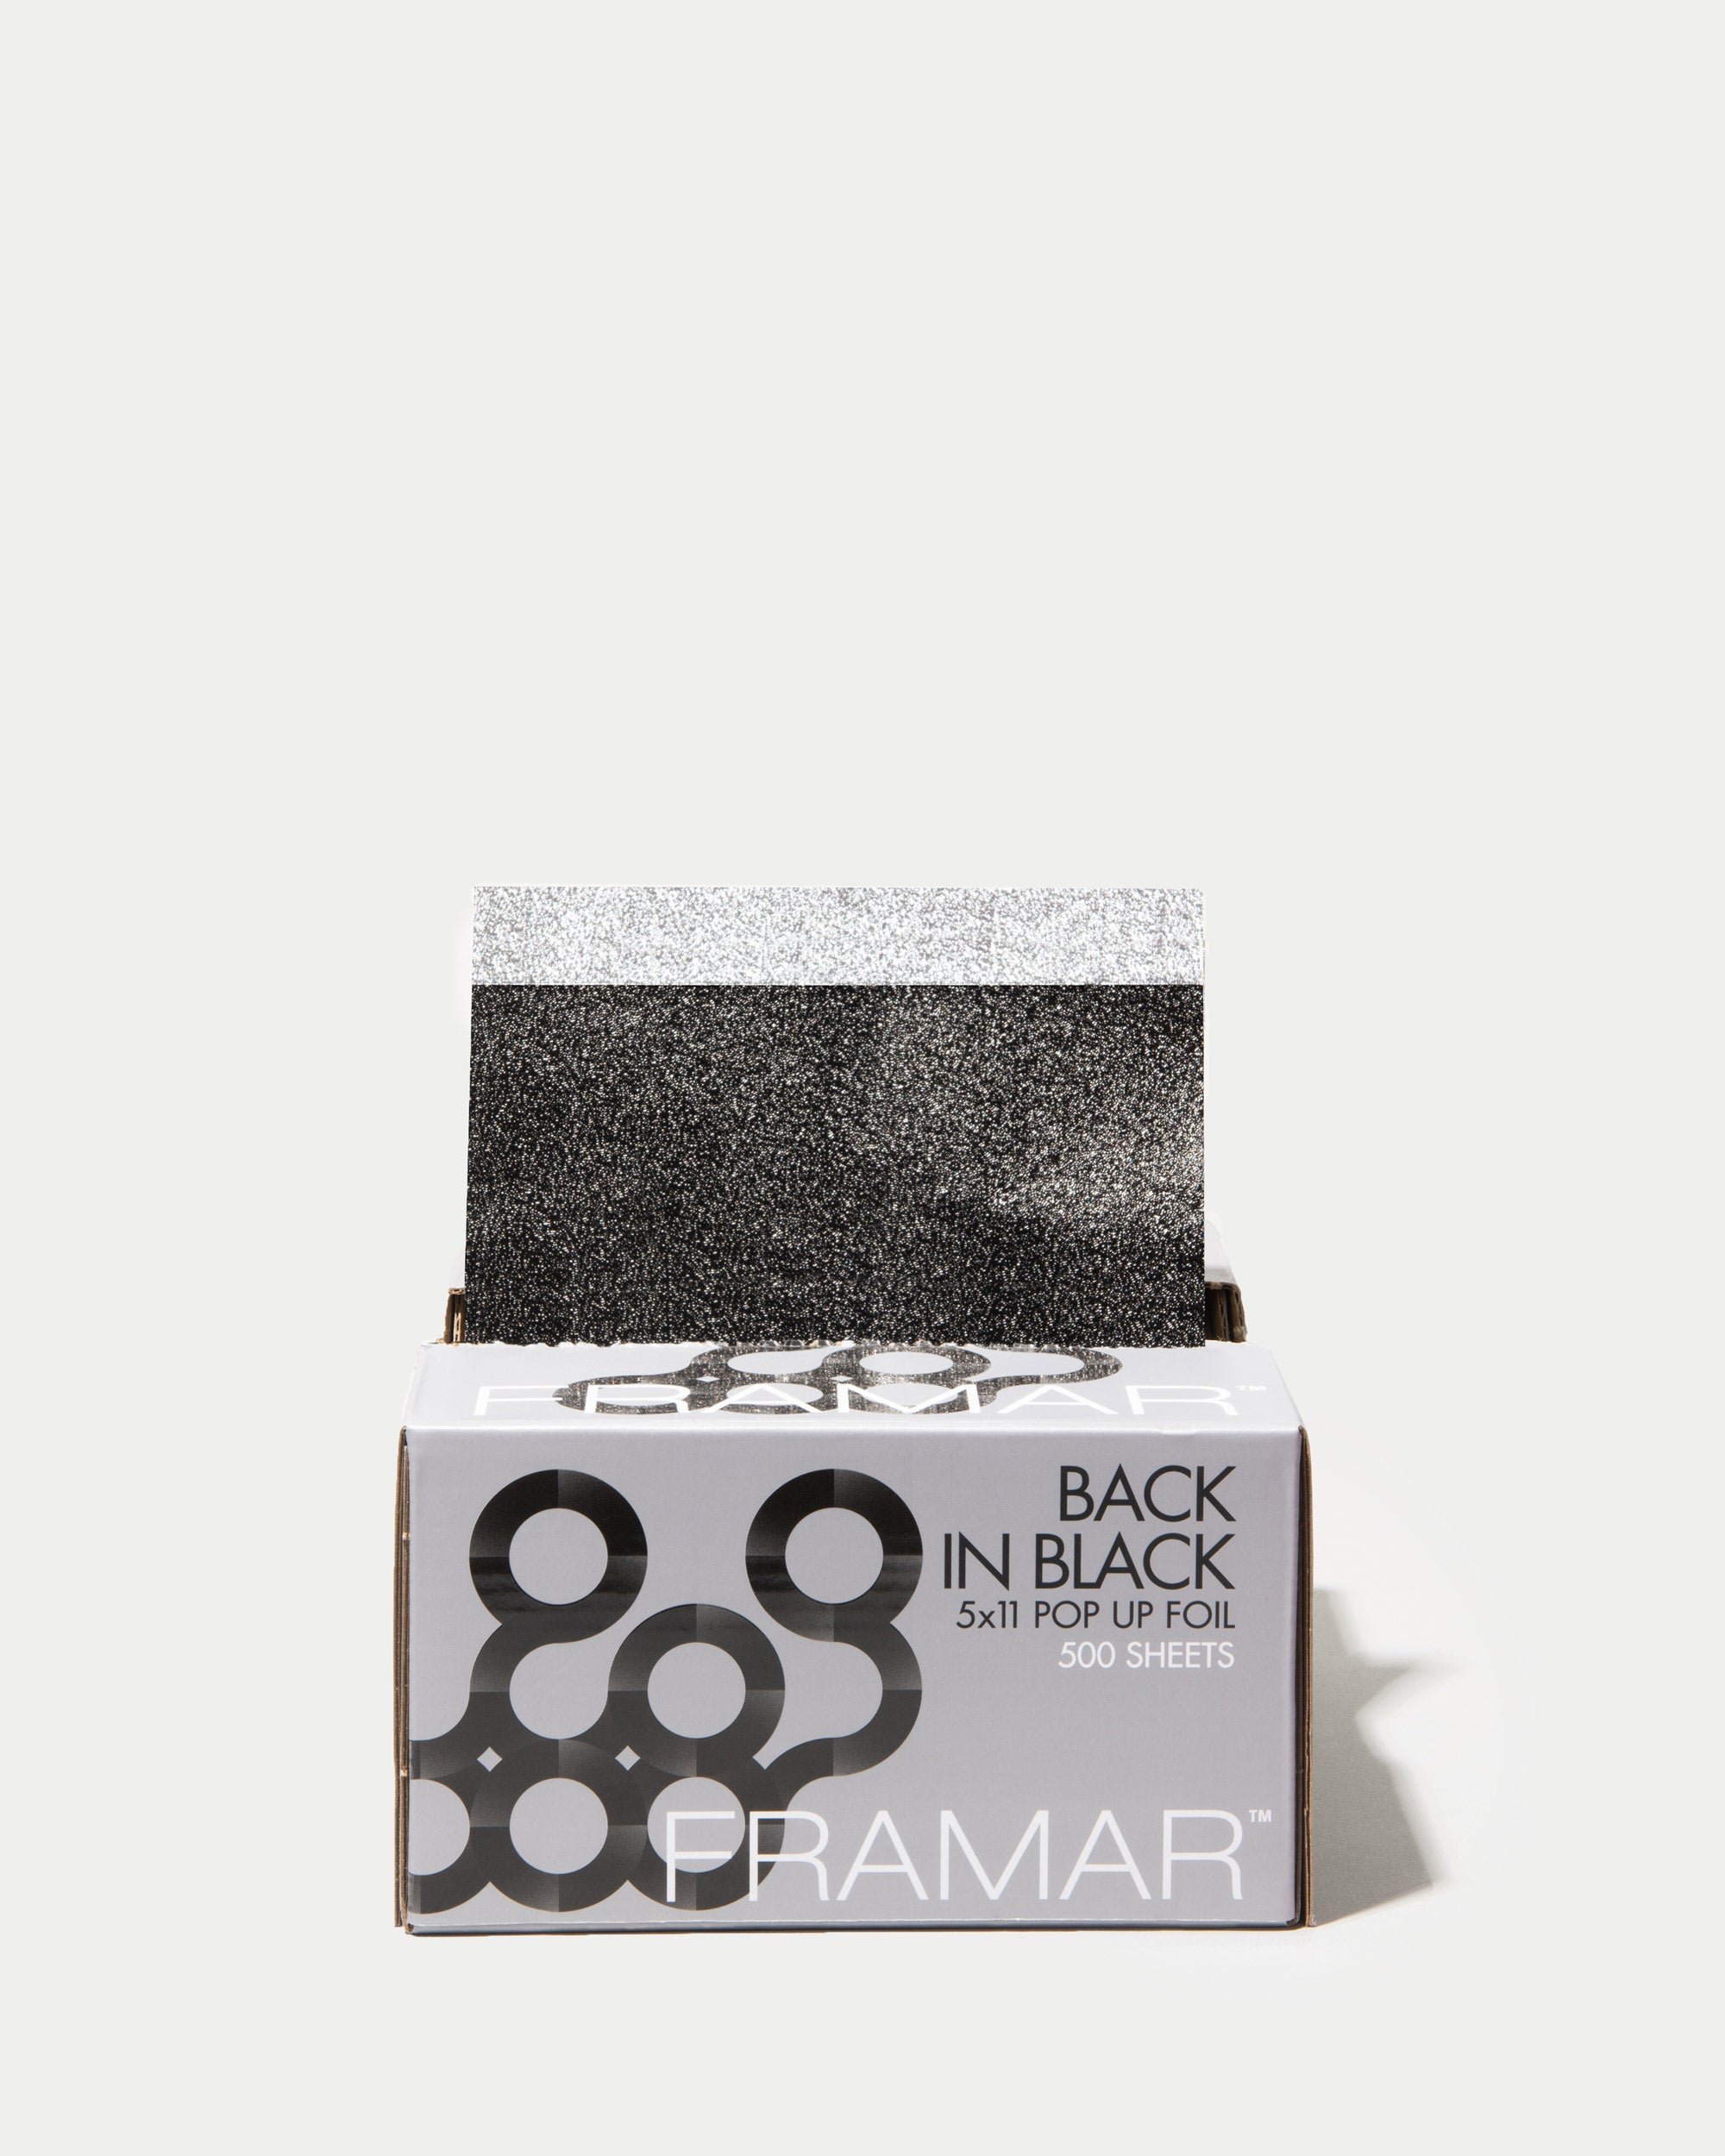 Framar 5x11 Black Hair Foils | 500 Foil Sheets, Balayage for Hair Color – Foil Highlights, Foil Hair Salon, Aluminum Foil Sheets